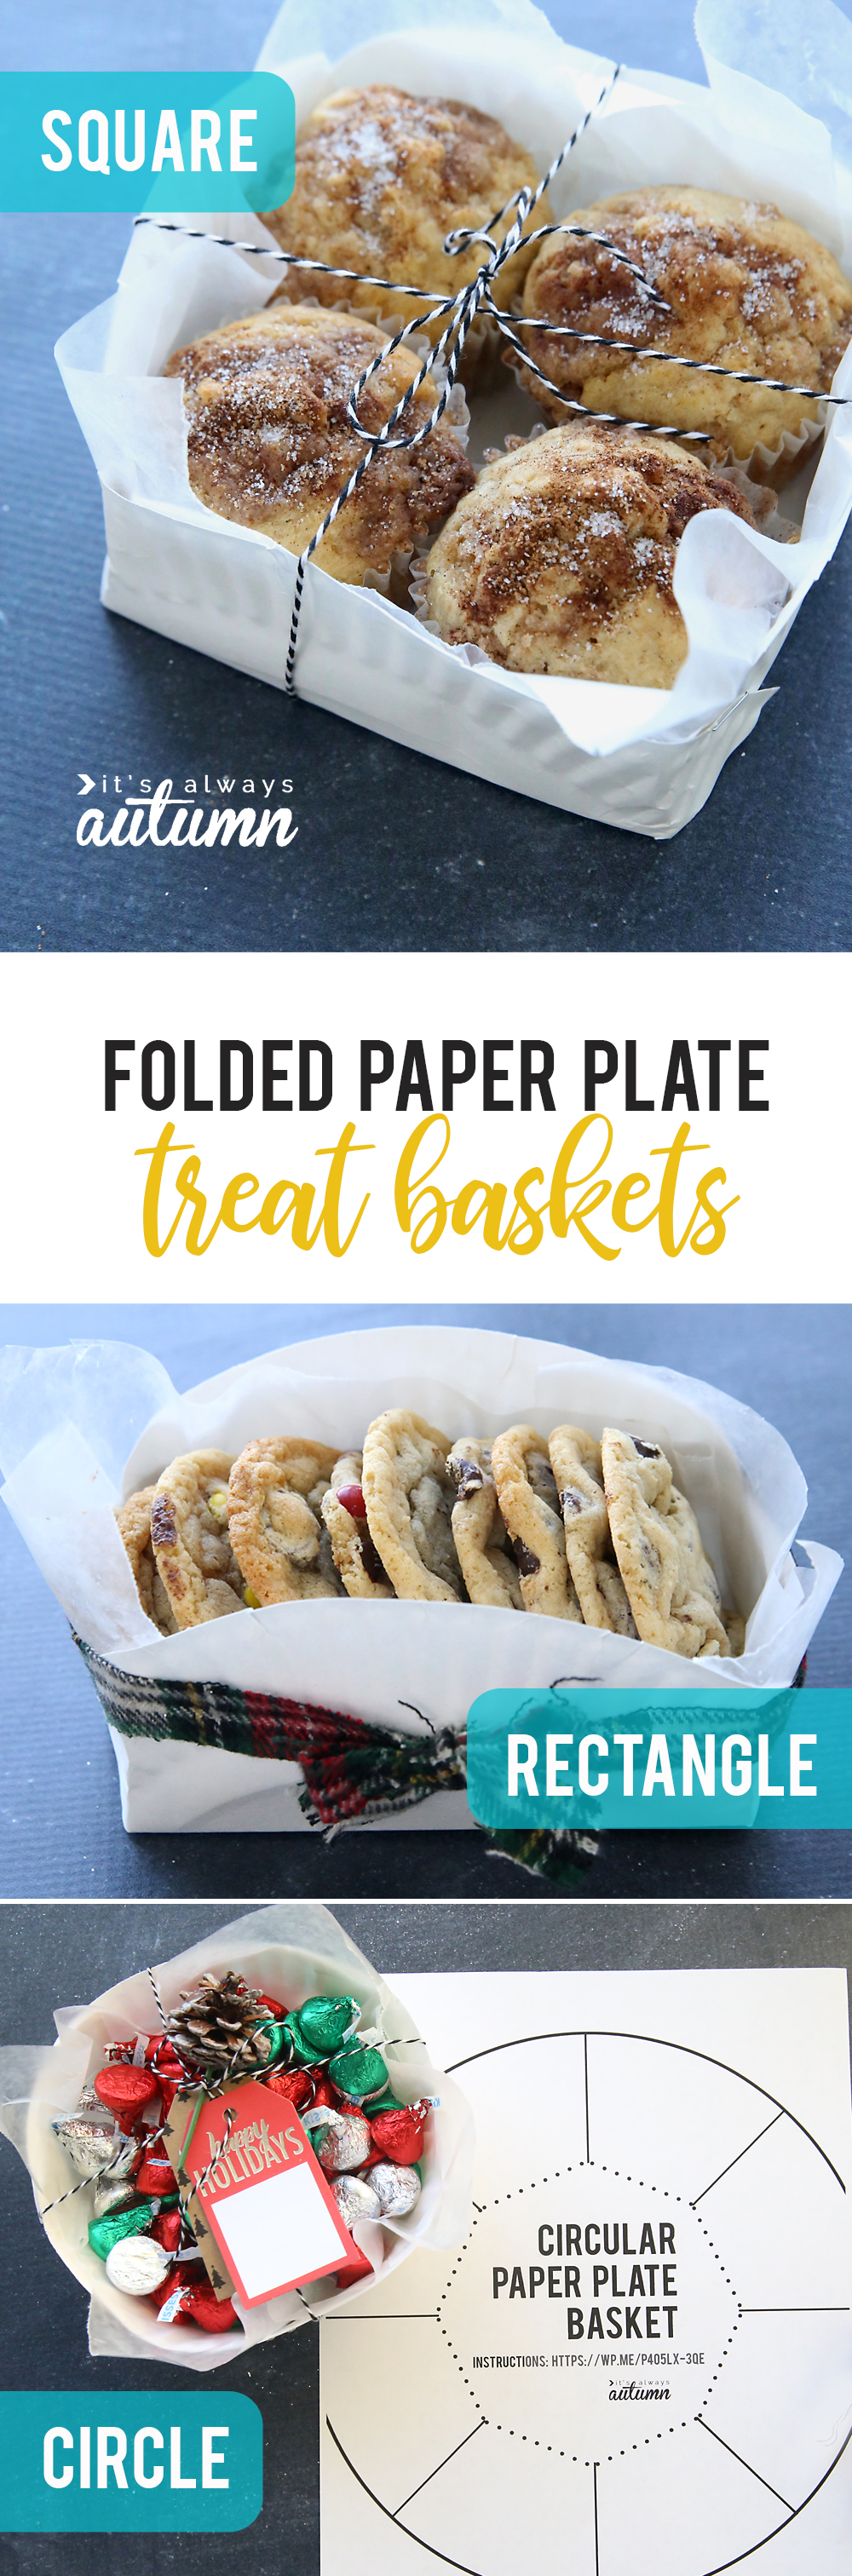 Folded paper plate treat baskets full of baked goods